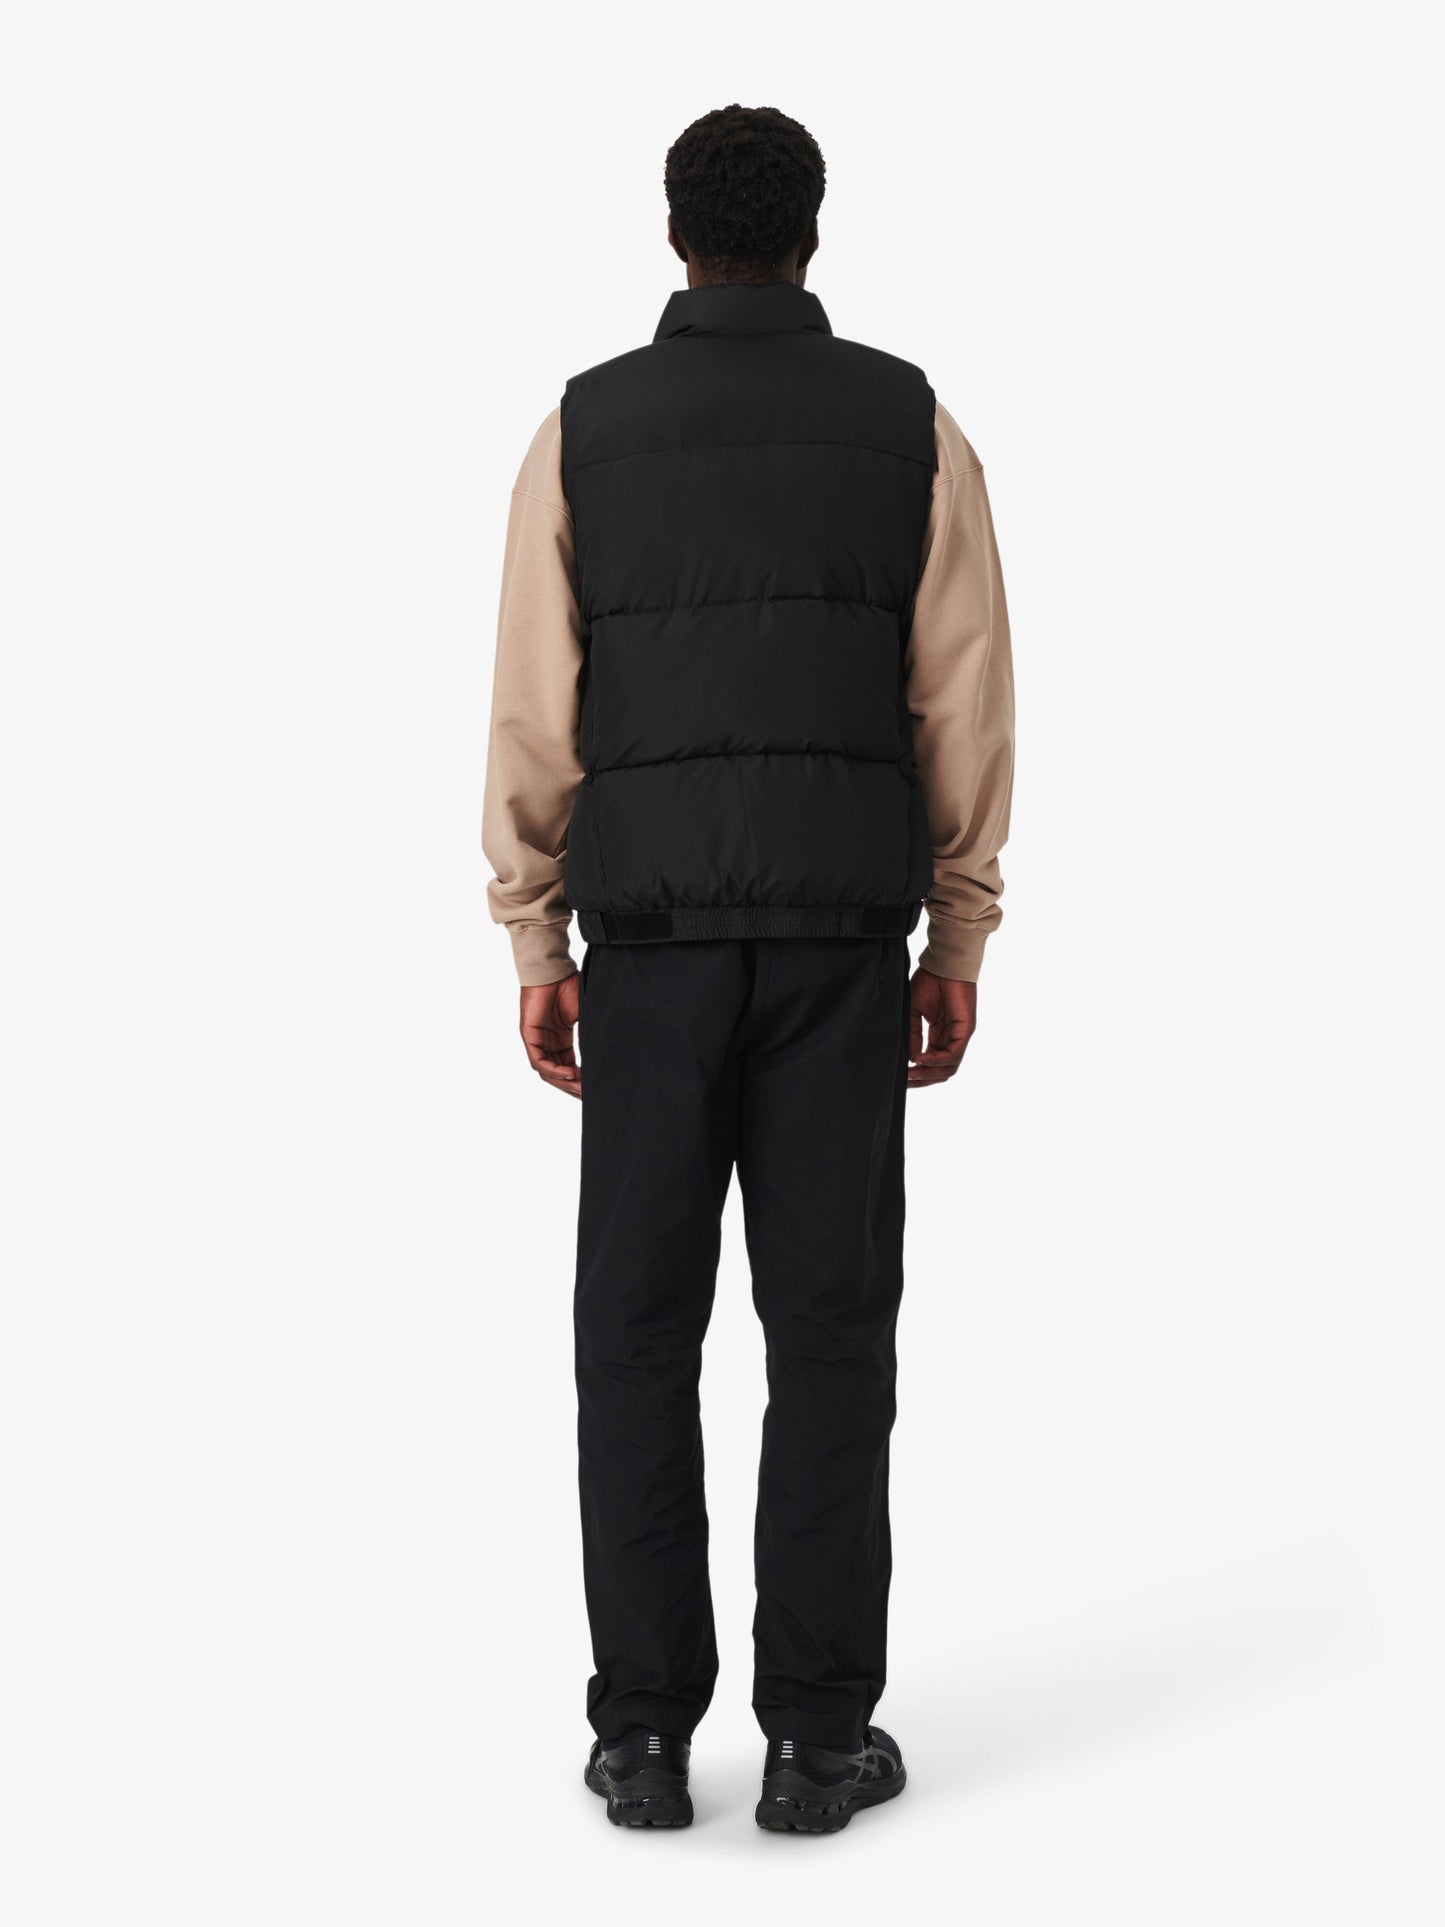 7 DAYS Weekend Puffer Vest Outerwear 001 Black